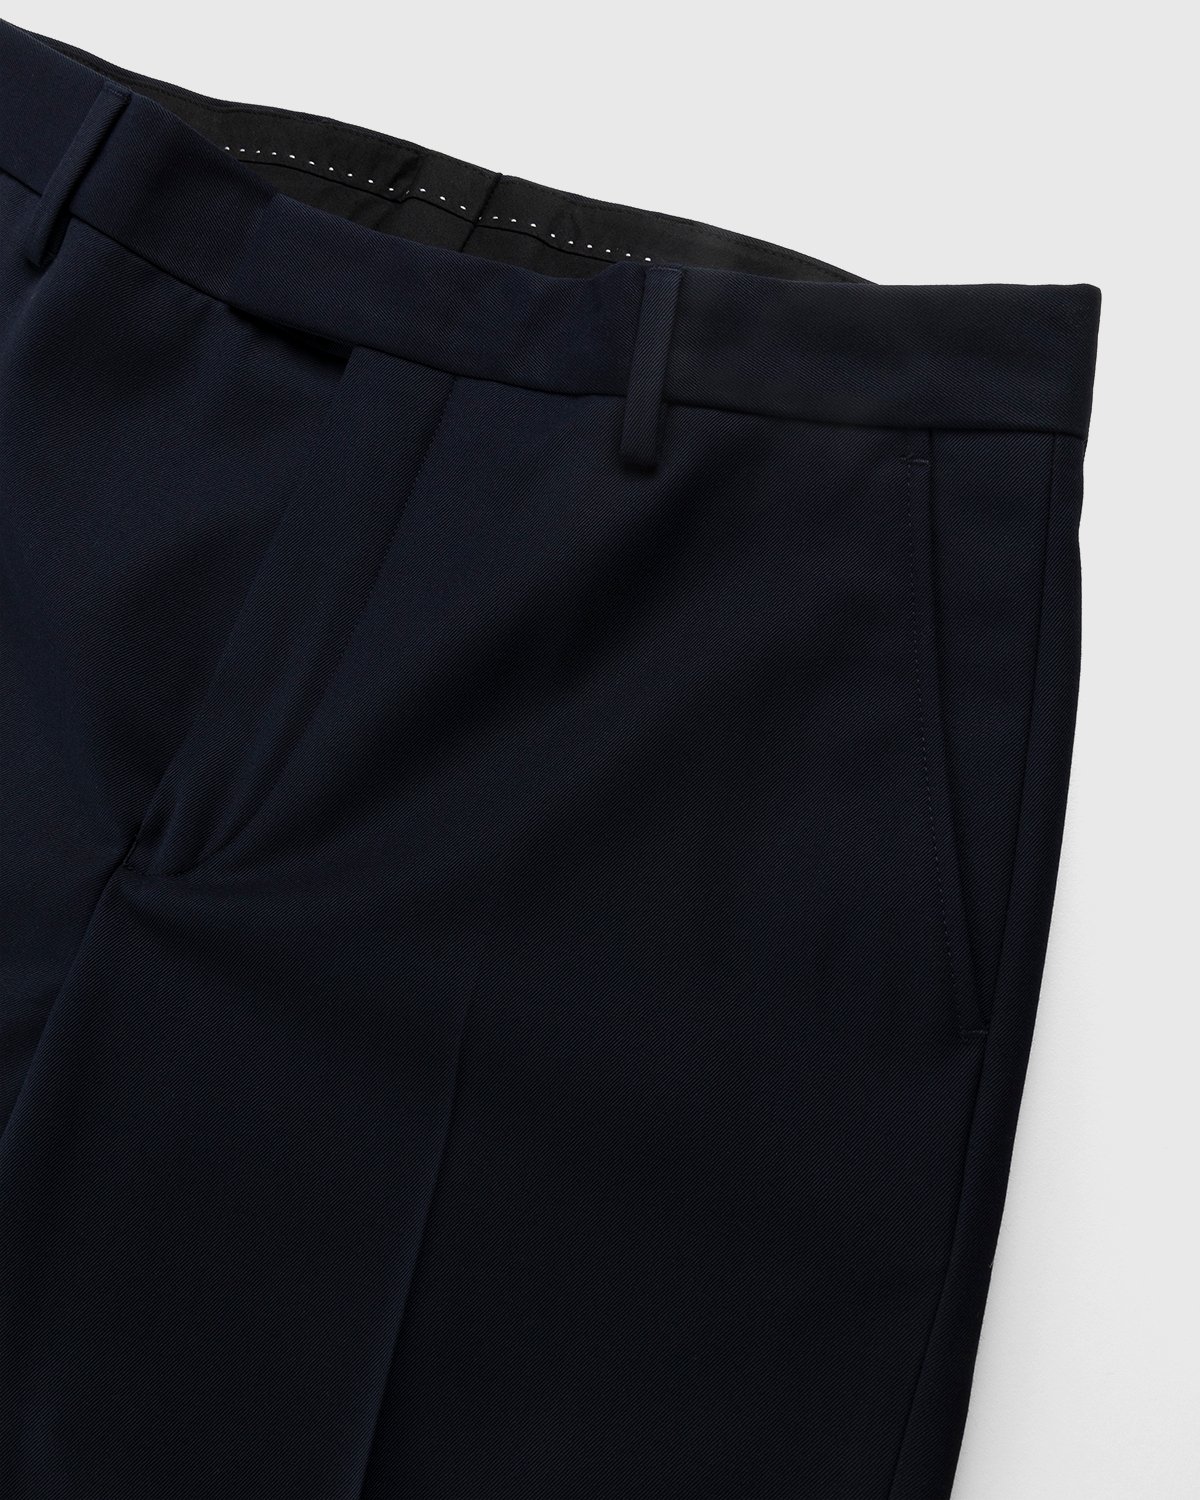 Dries van Noten - Prescott Double Layer Shorts Navy - Clothing - Blue - Image 4